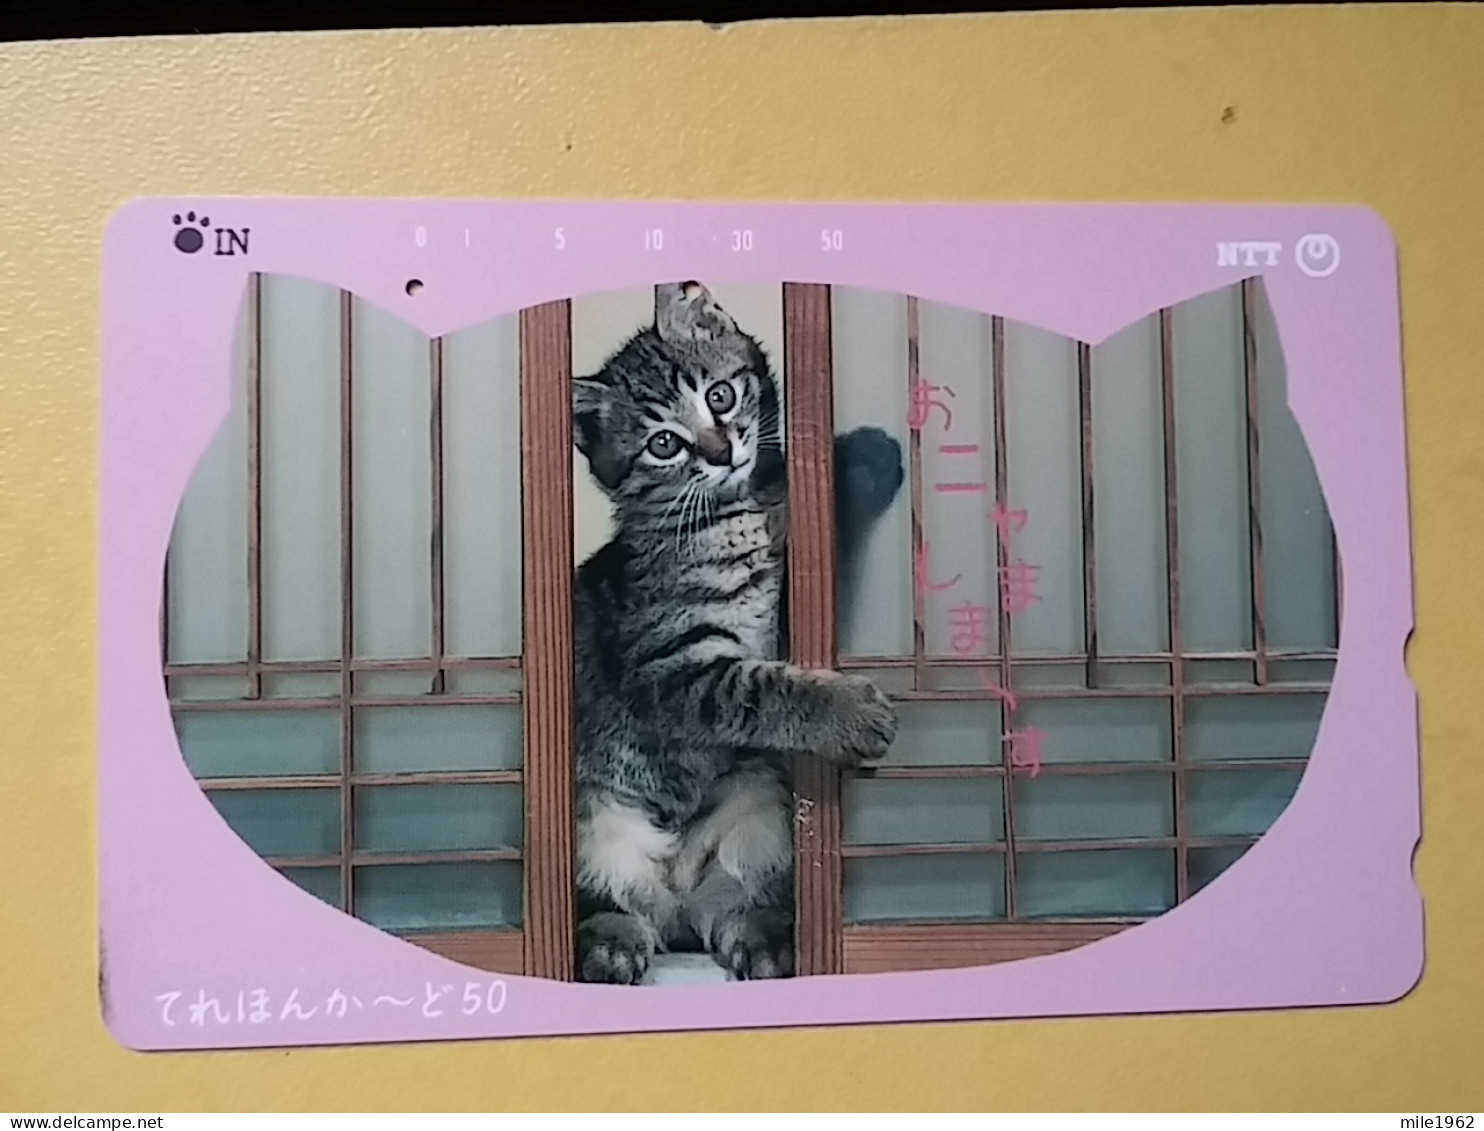 T-372 - JAPAN, Japon, Nipon, TELECARD, PHONECARD, Cat, Chat, NTT 251-151 - Cats